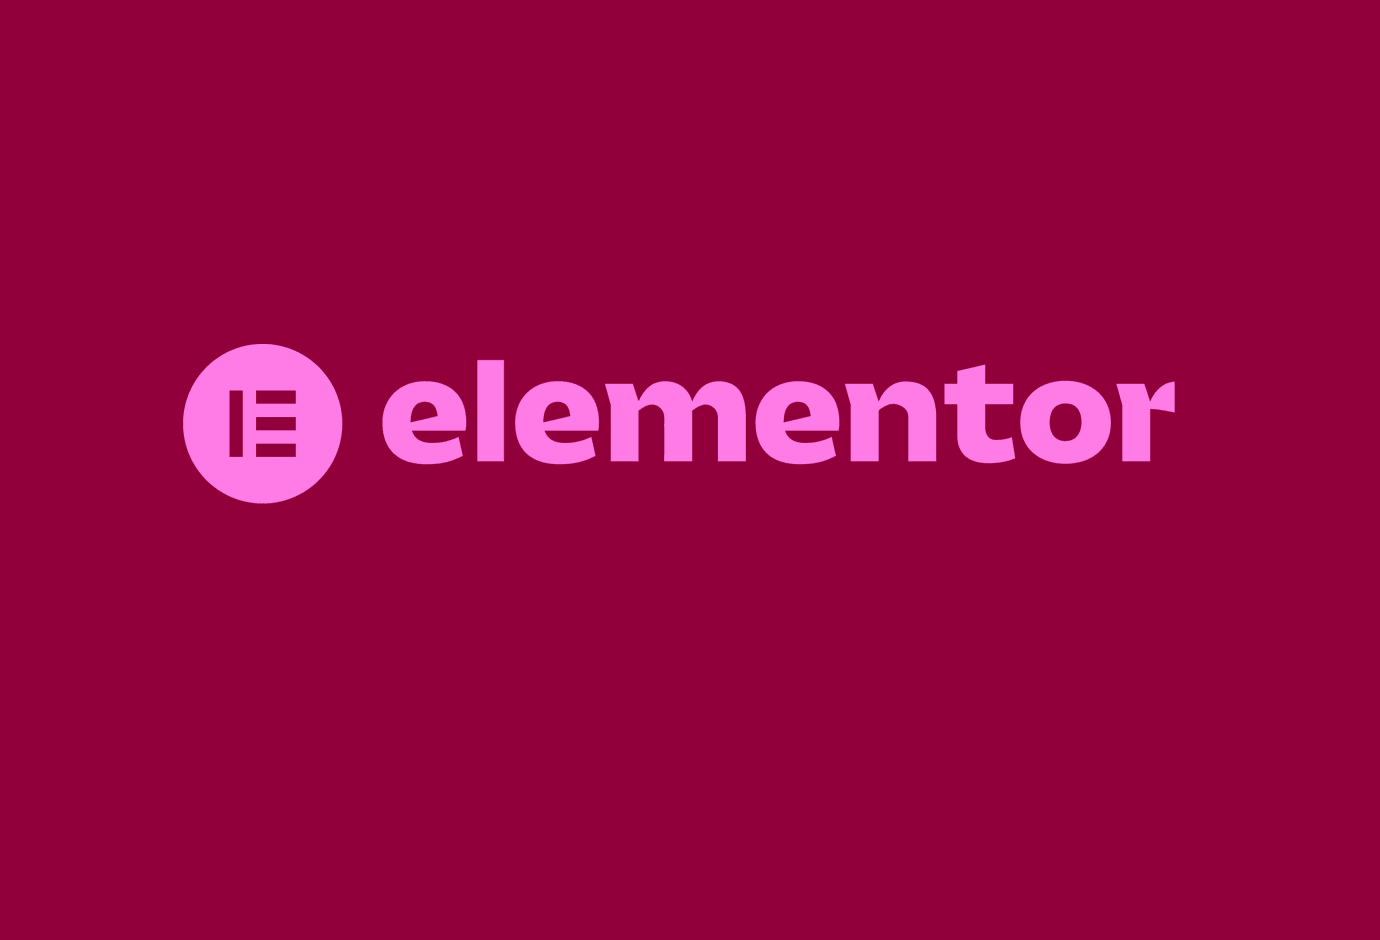 The Elementor logo on a dark red background